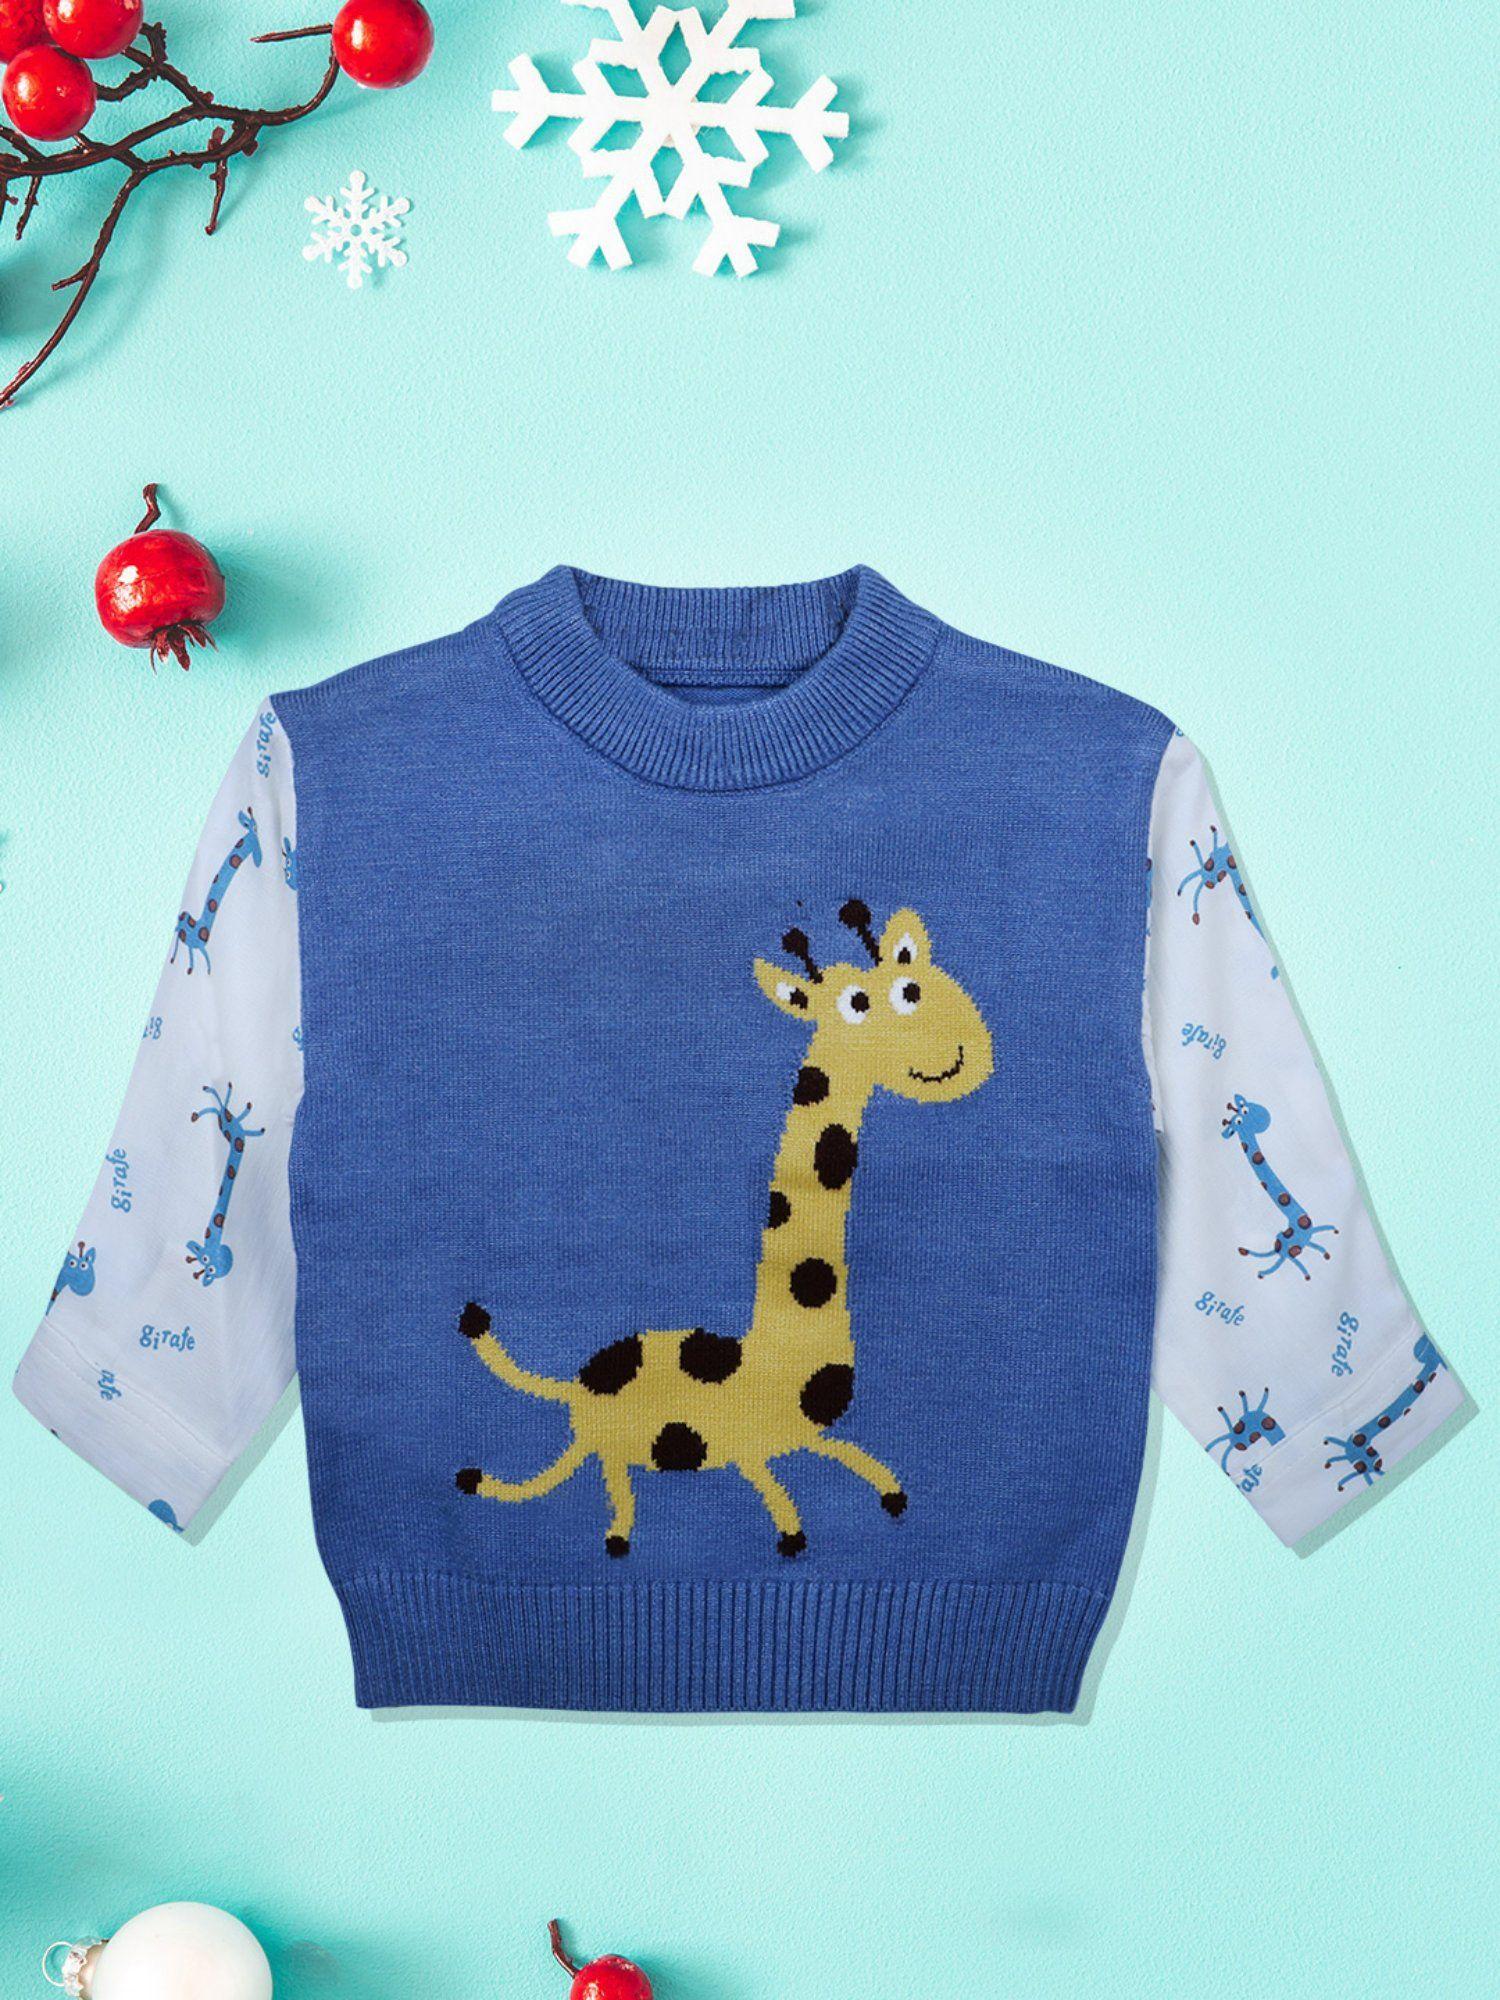 cute giraffe premium full sleeves knitted sweater blue and white